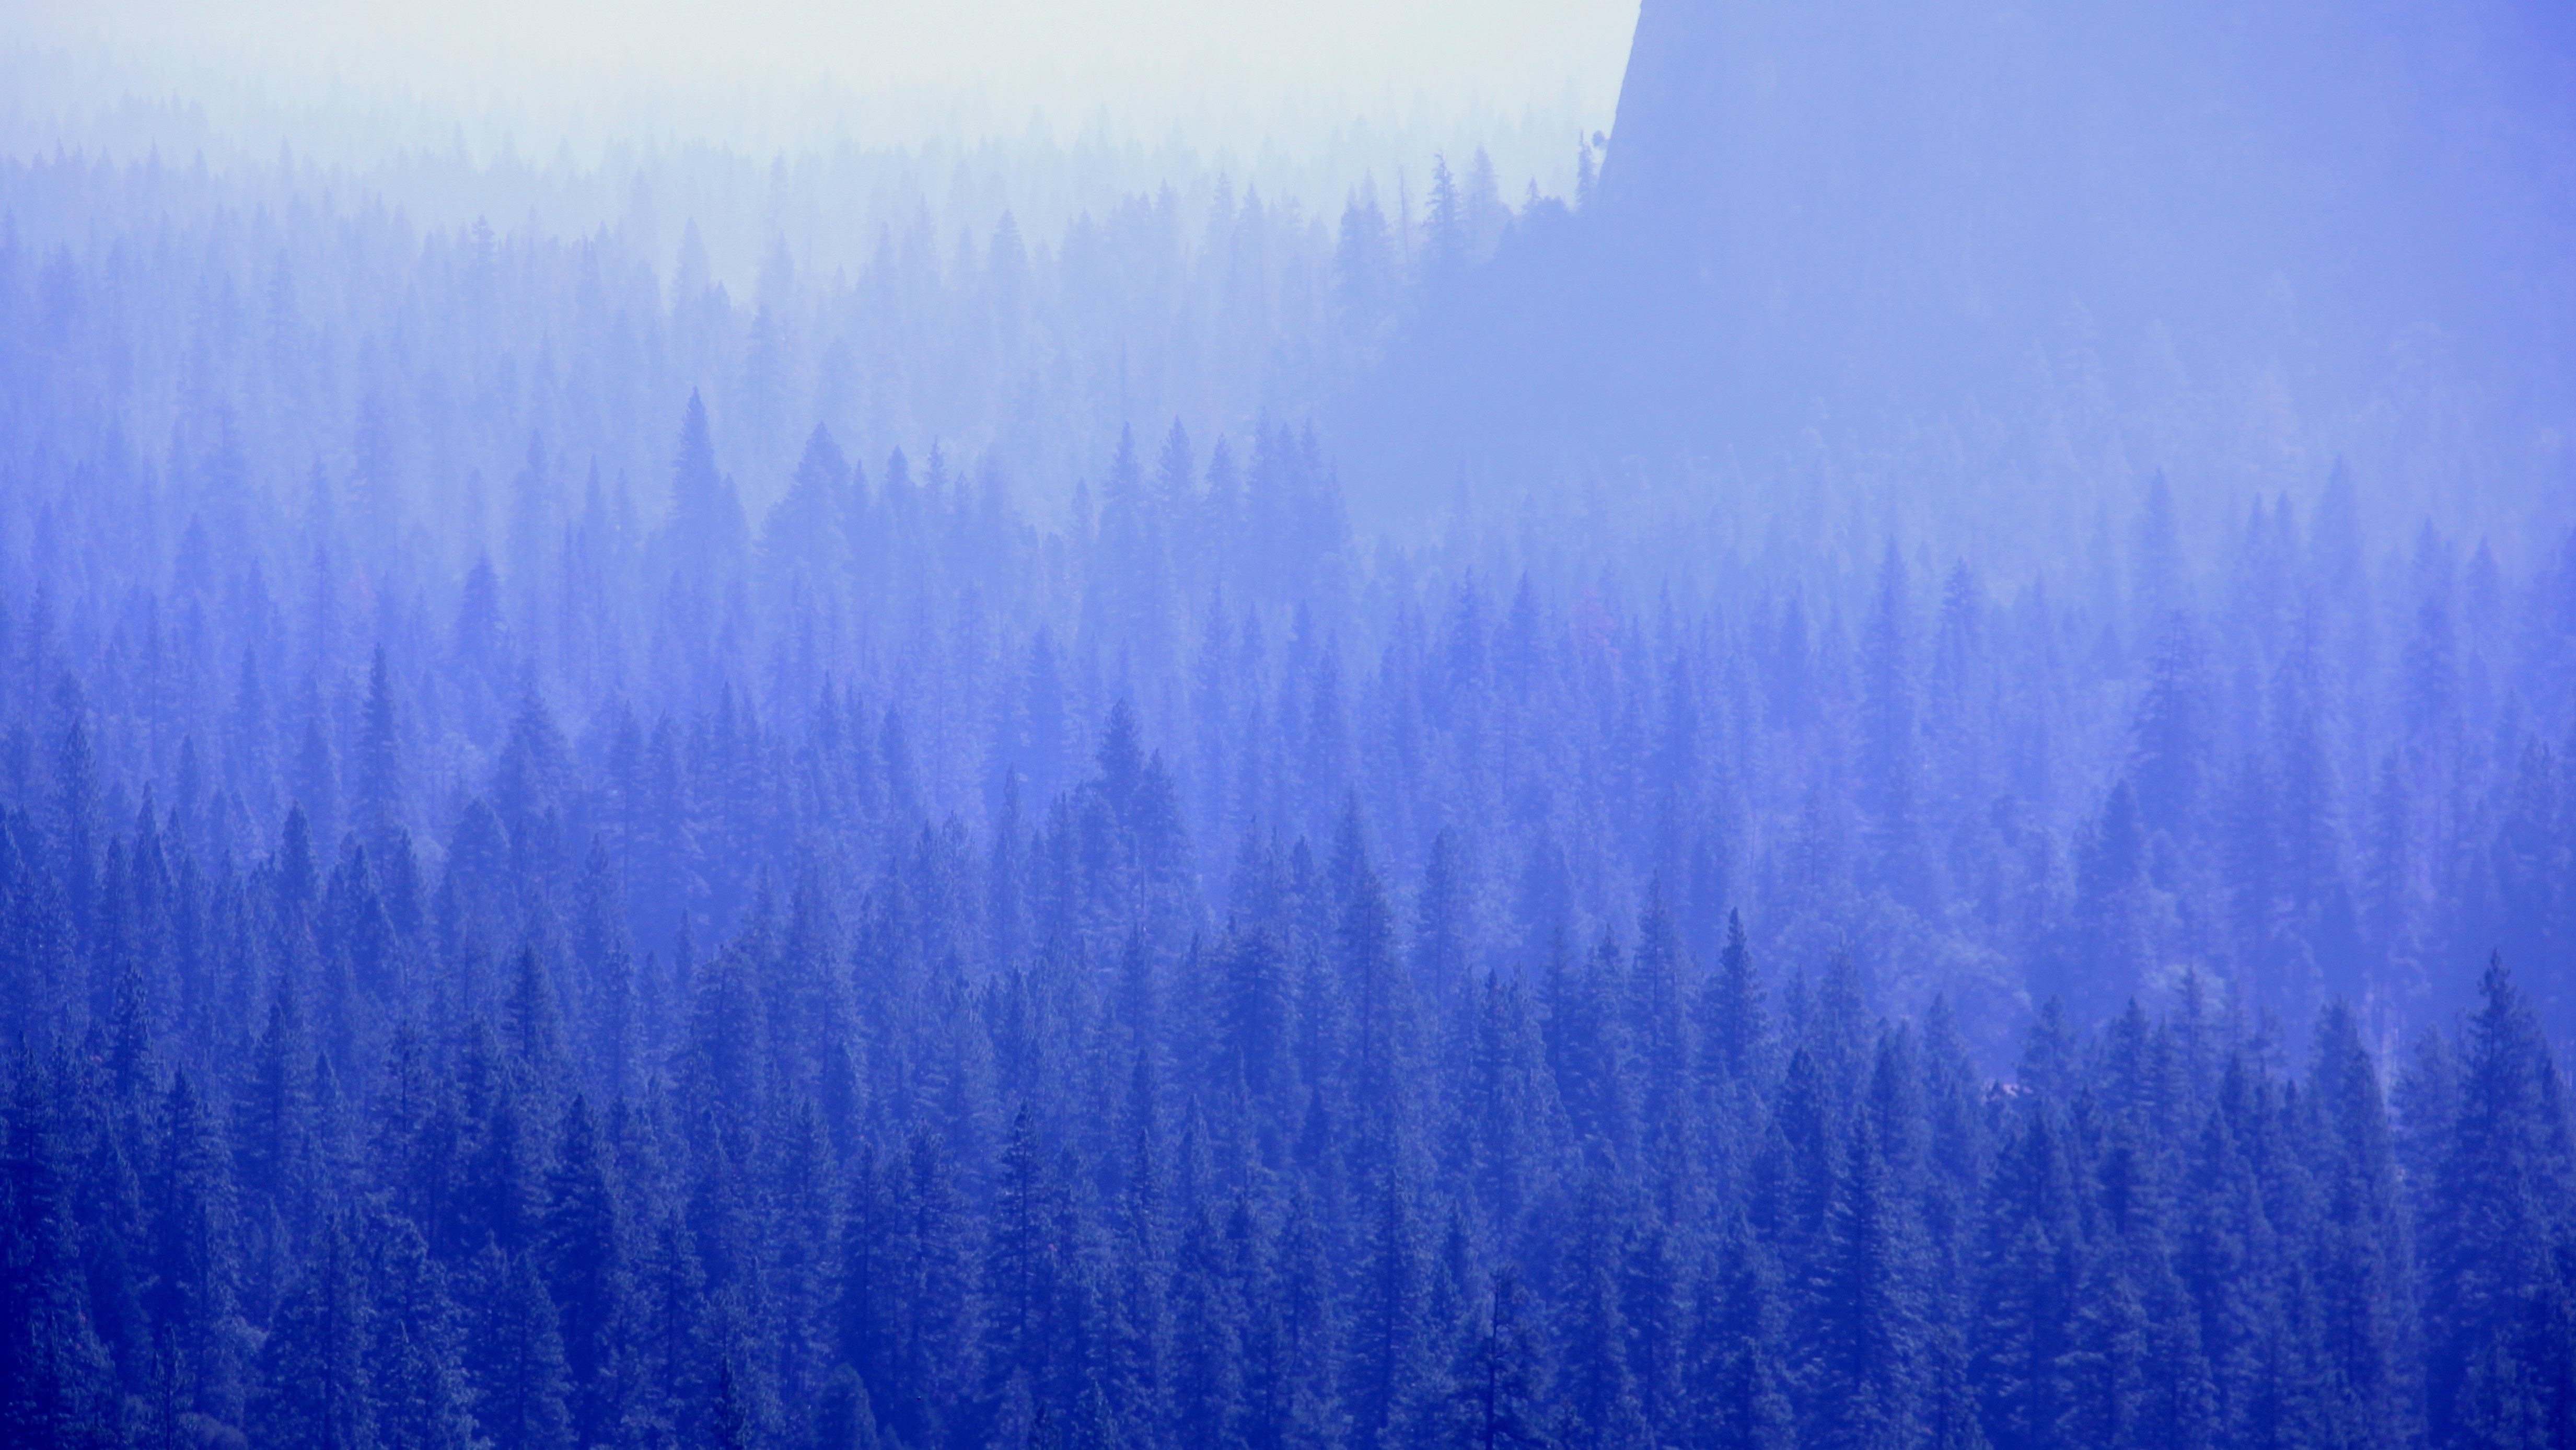 General 4930x2775 forest trees blue mist digital art